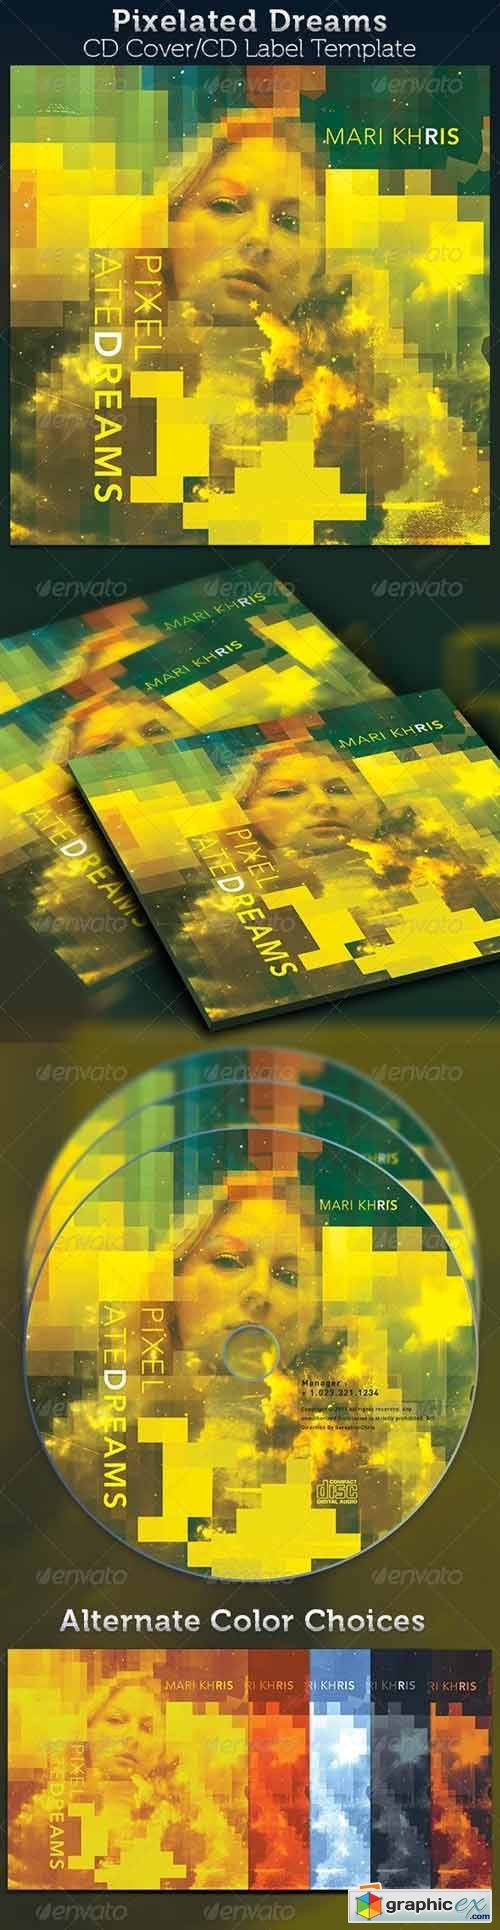 Pixelated Dreams CD Cover Artwork Template